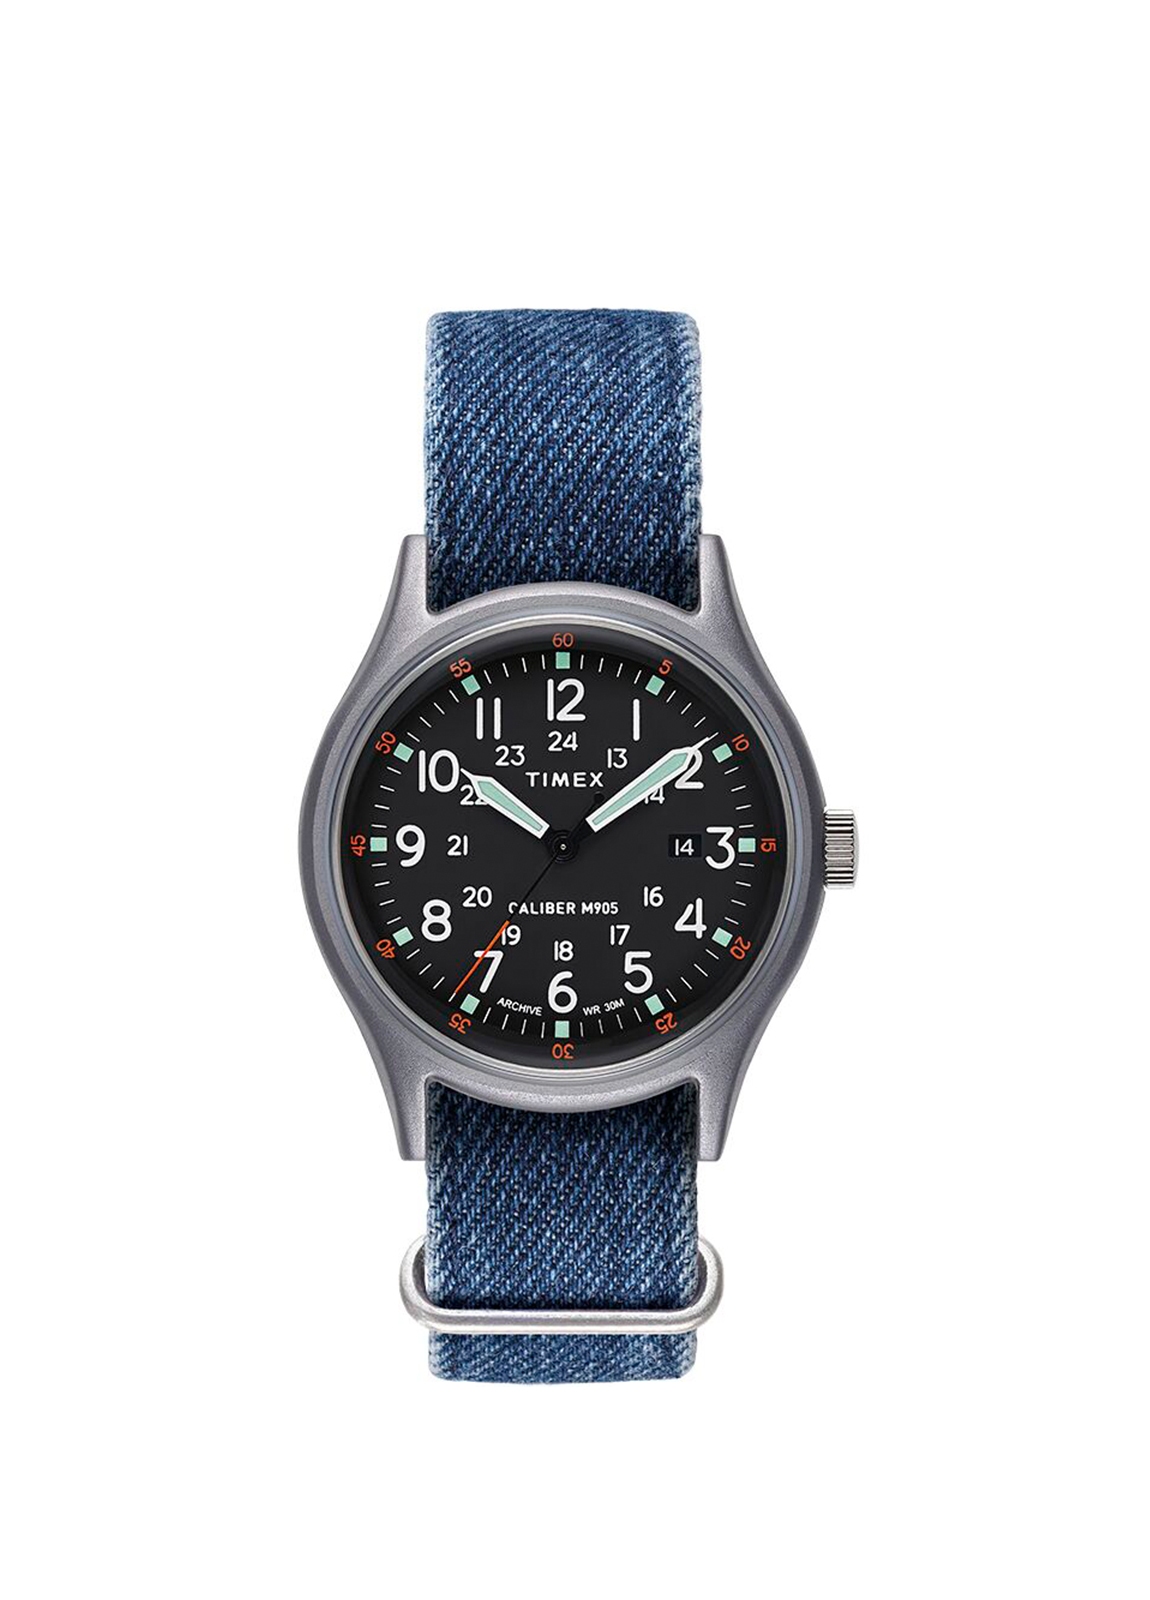 Reloj Timex azul.